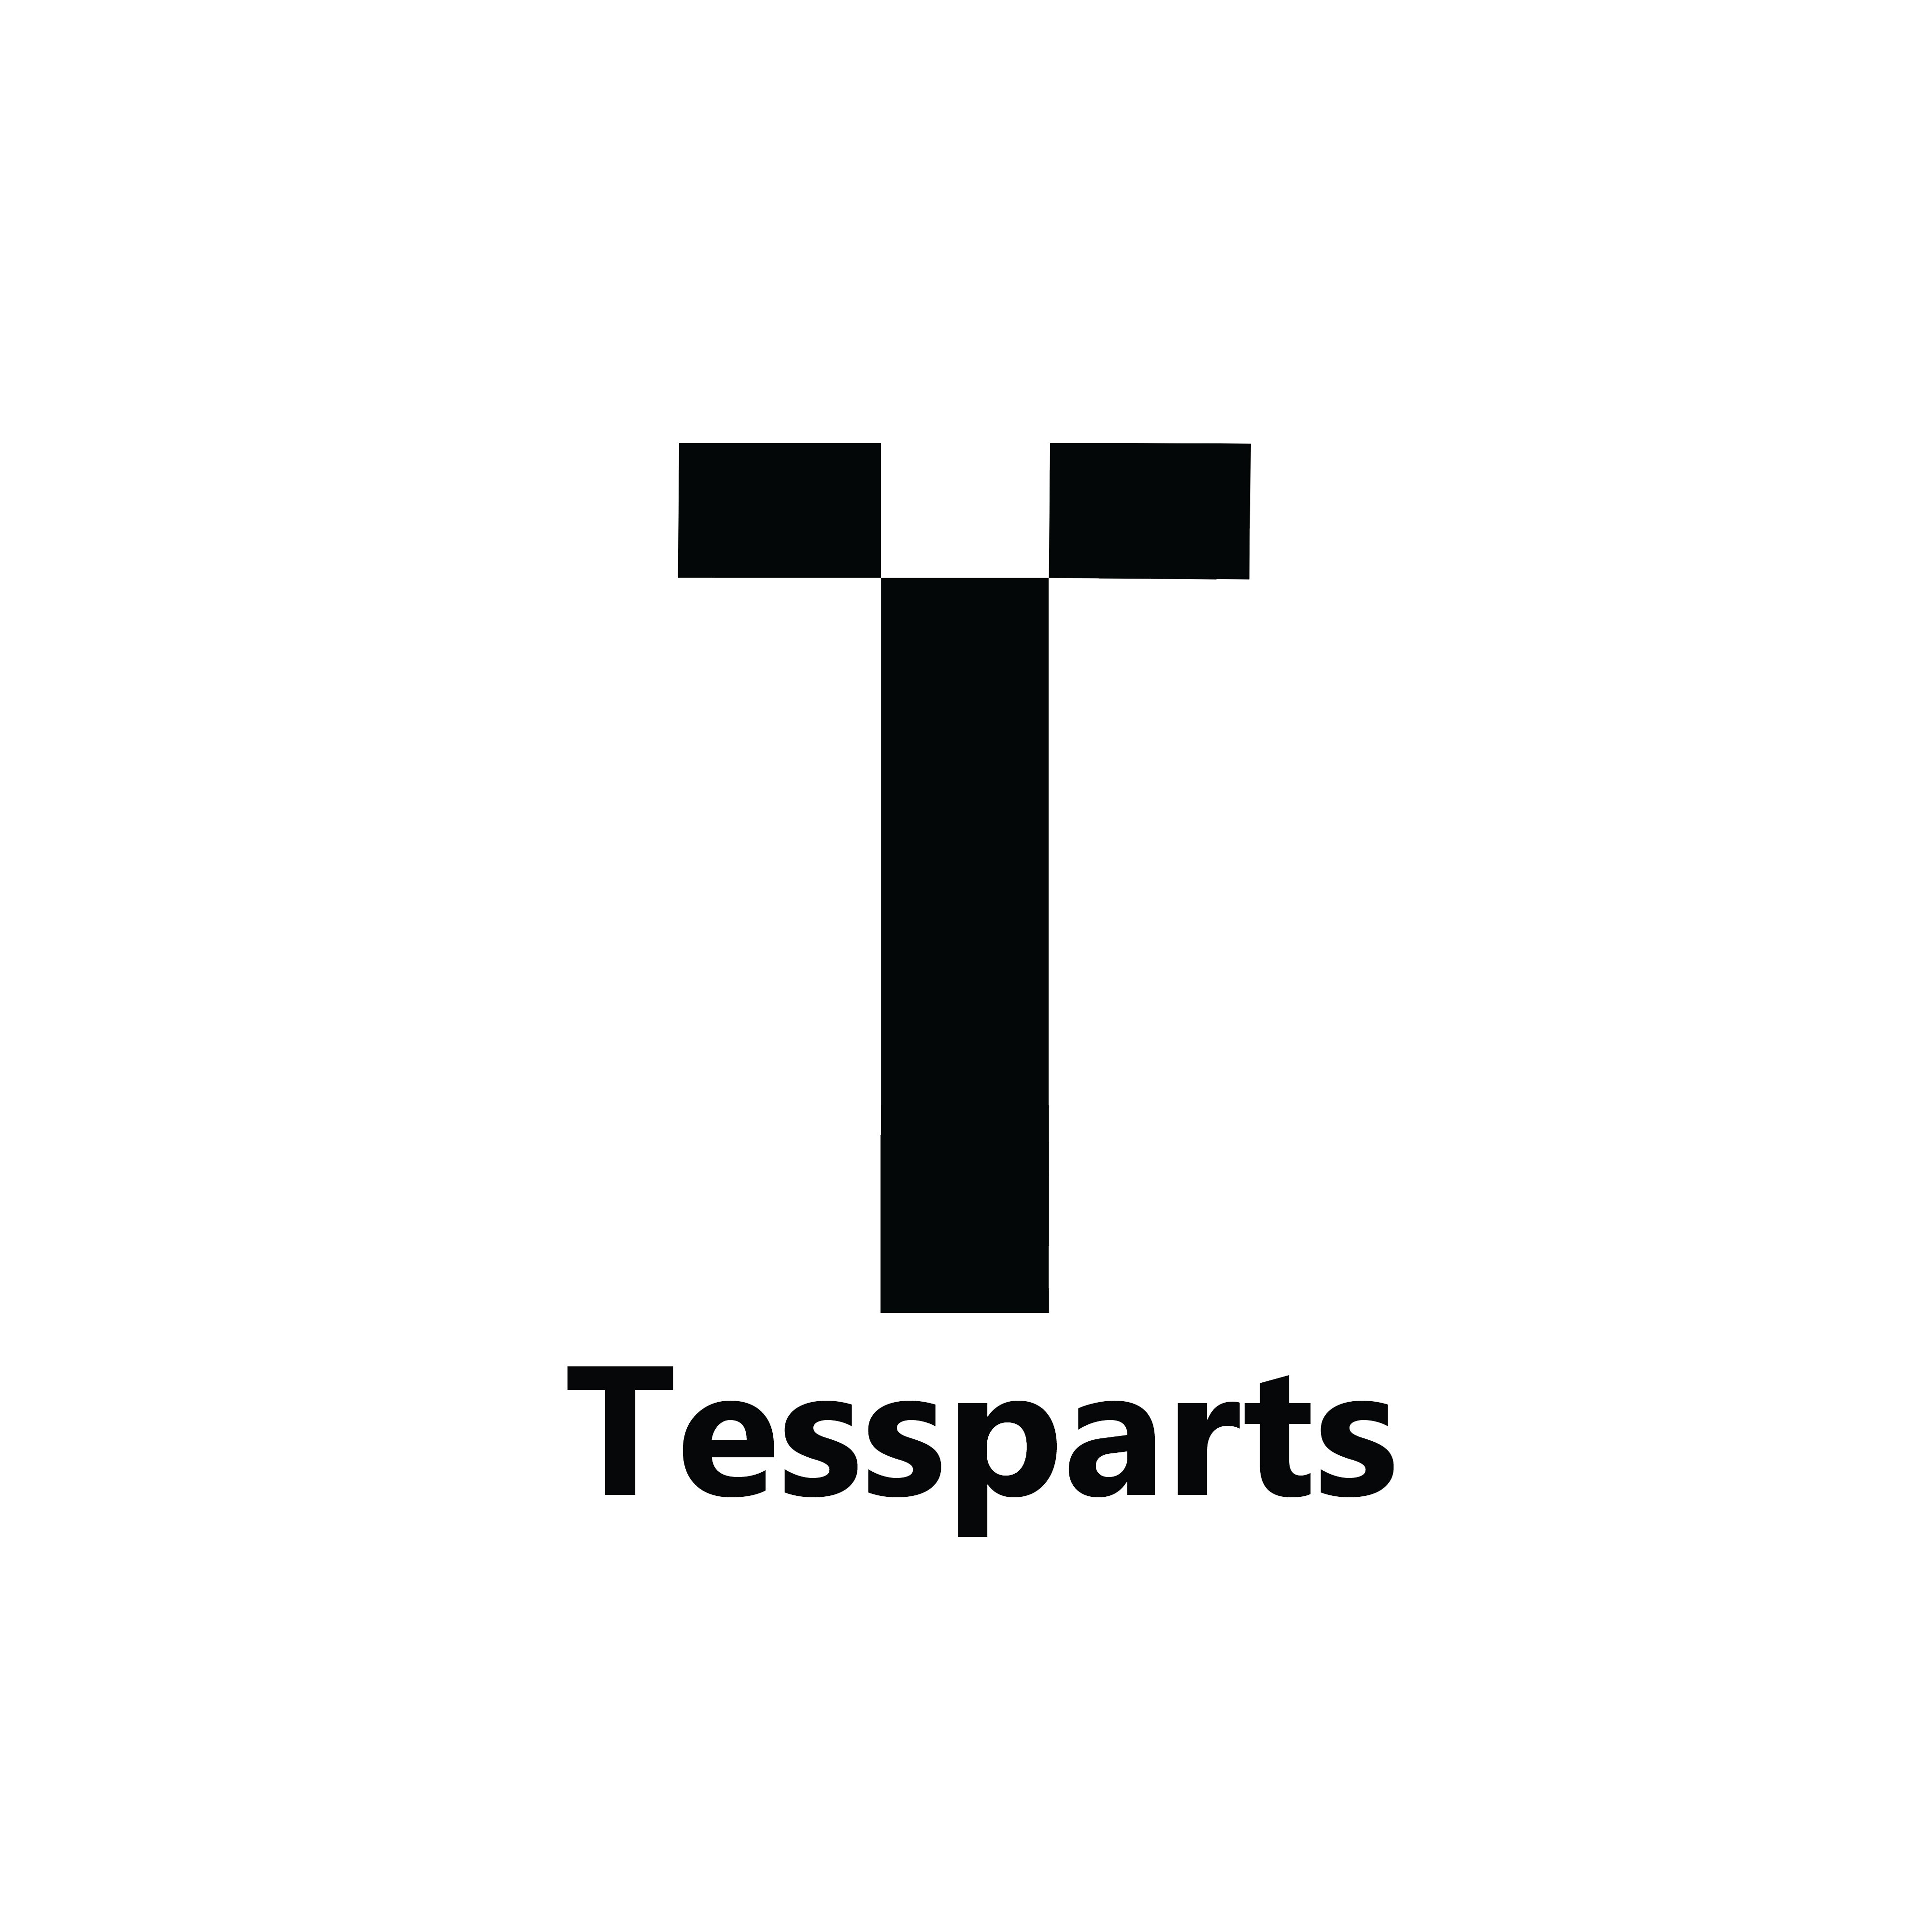 tessparts